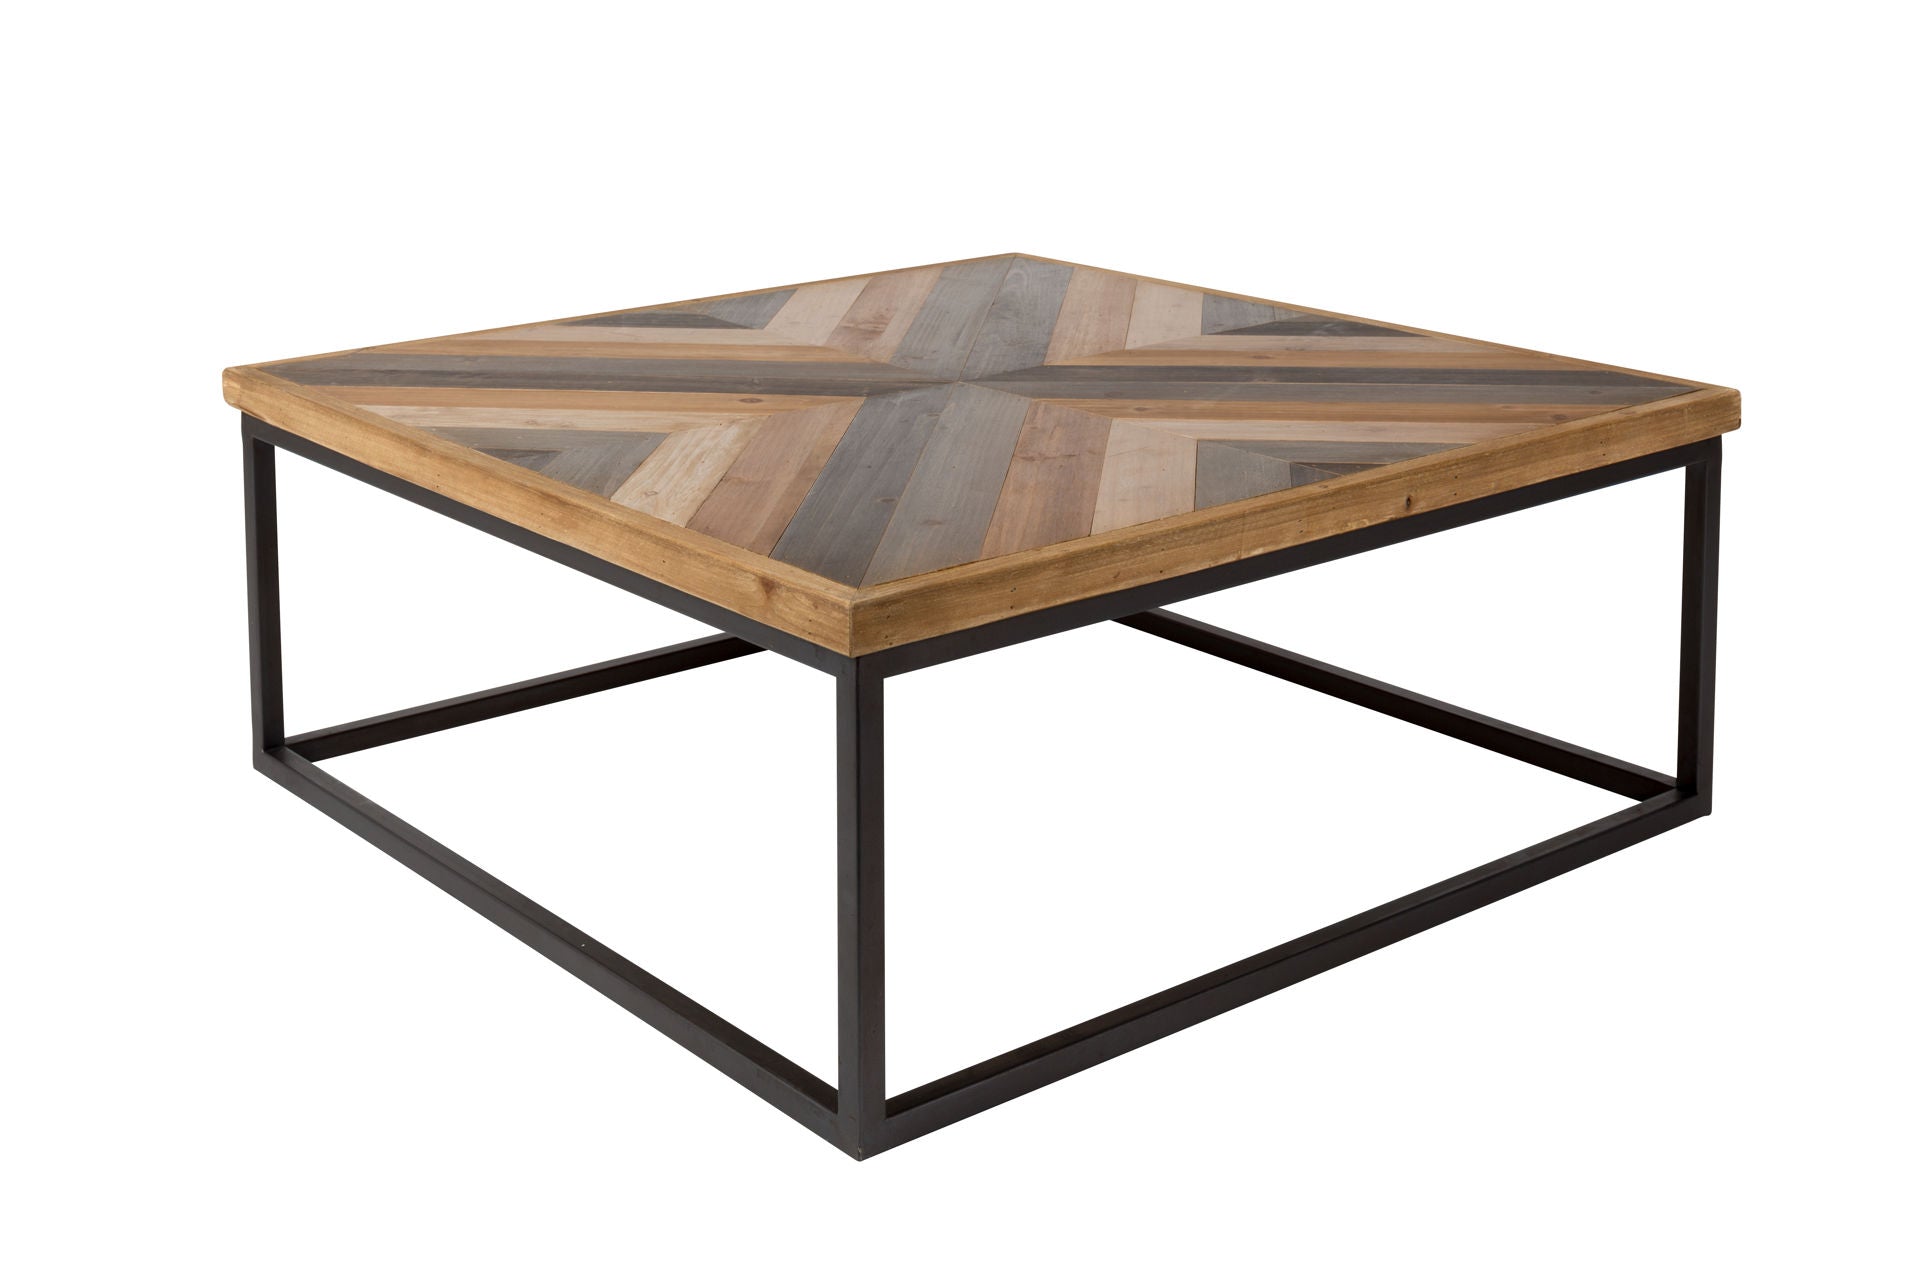 Nancy's Leeds Table - Modern - Multicolored - Wood, Mdf, Iron - 81 cm x 81 cm x 32 cm